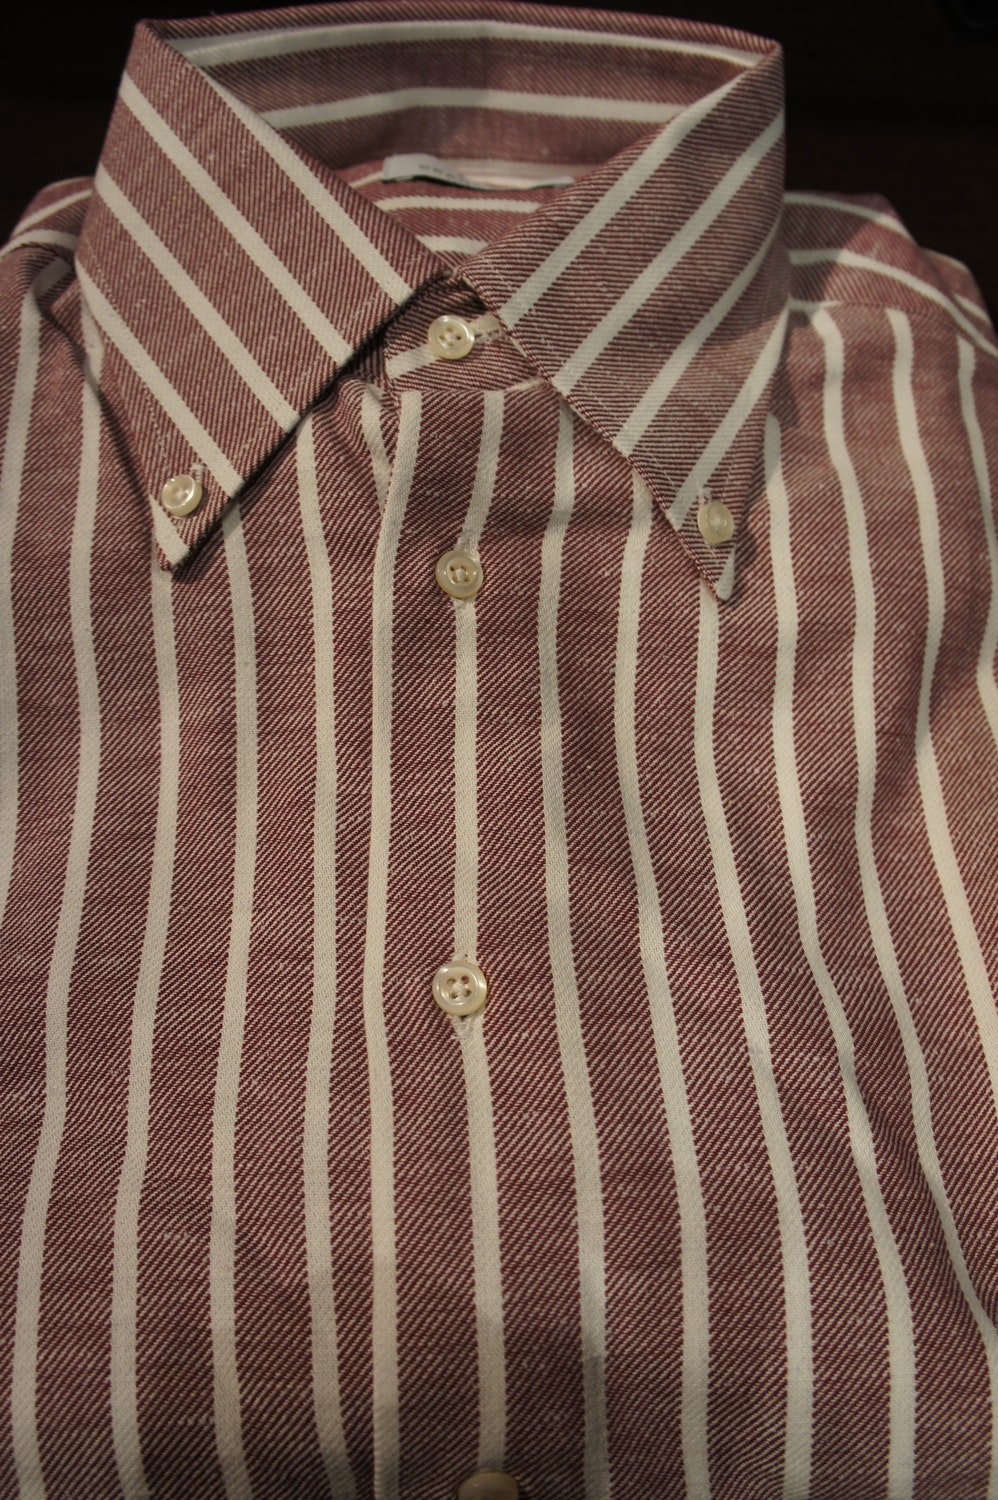 Striped Shirt - Burgundy/White